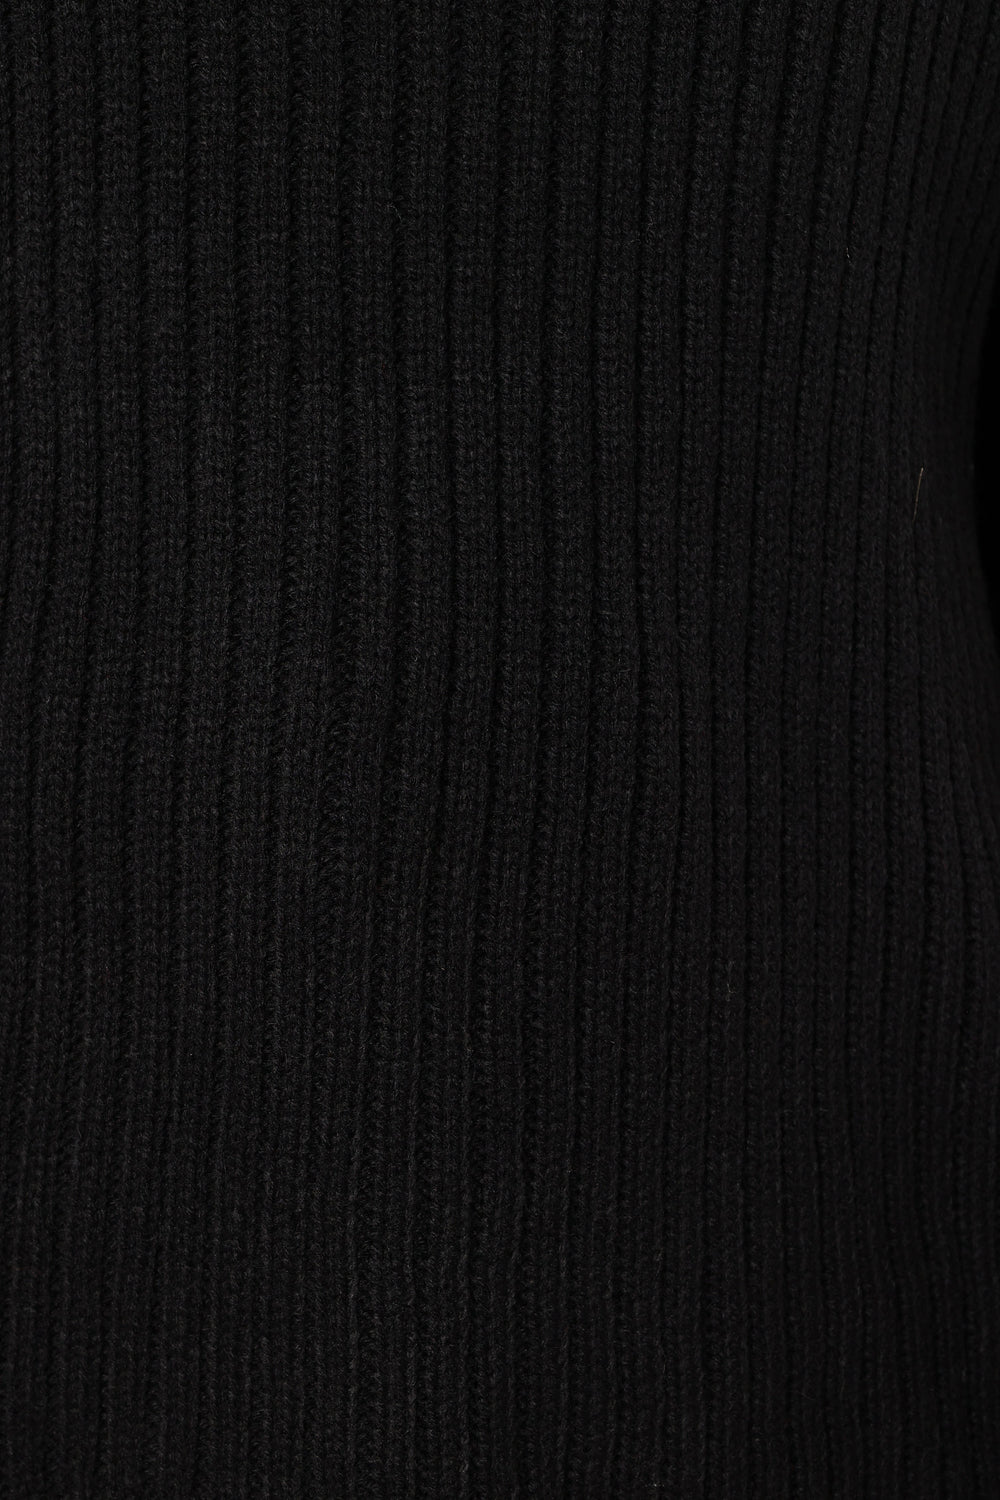 Petal and Pup USA KNITWEAR Lorelei Textured Sleeve Knit Sweater - Black